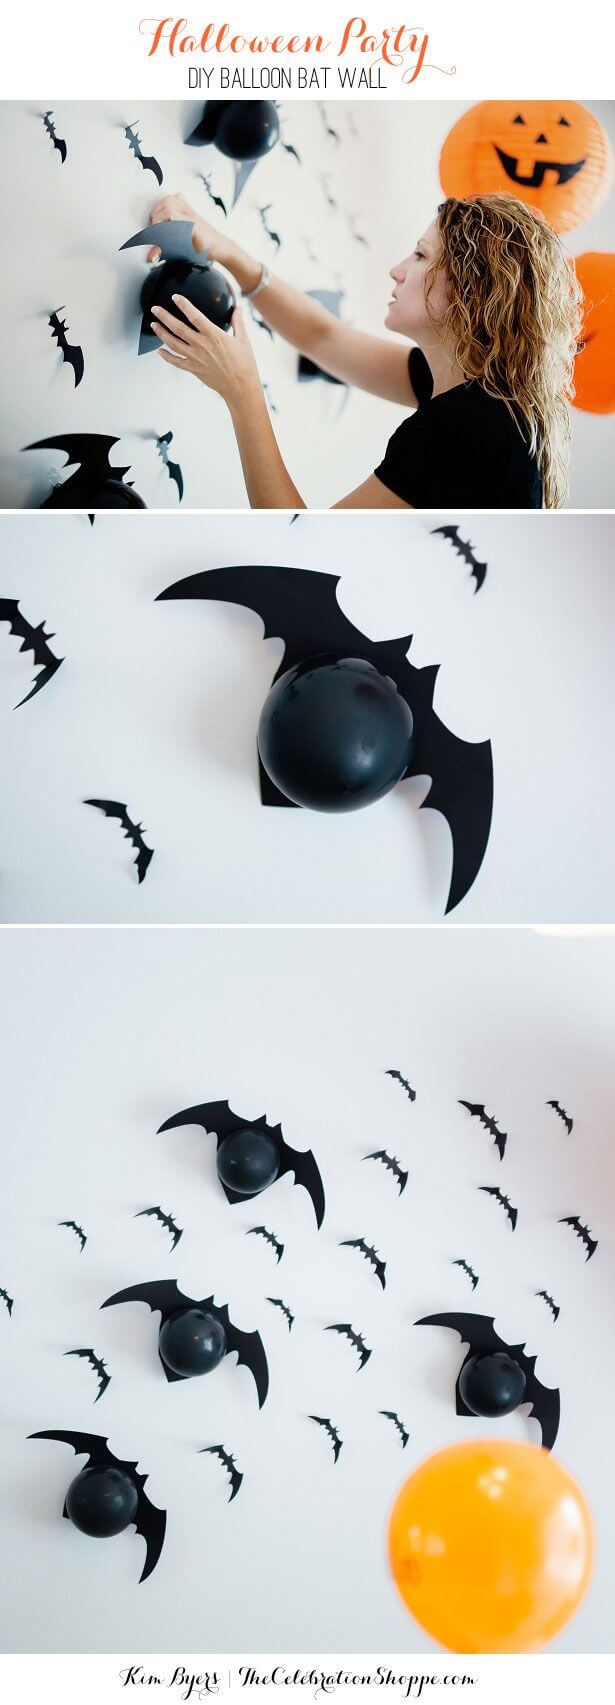 Batty Balloons | Awesome DIY Halloween Party Decor | BHG Halloween